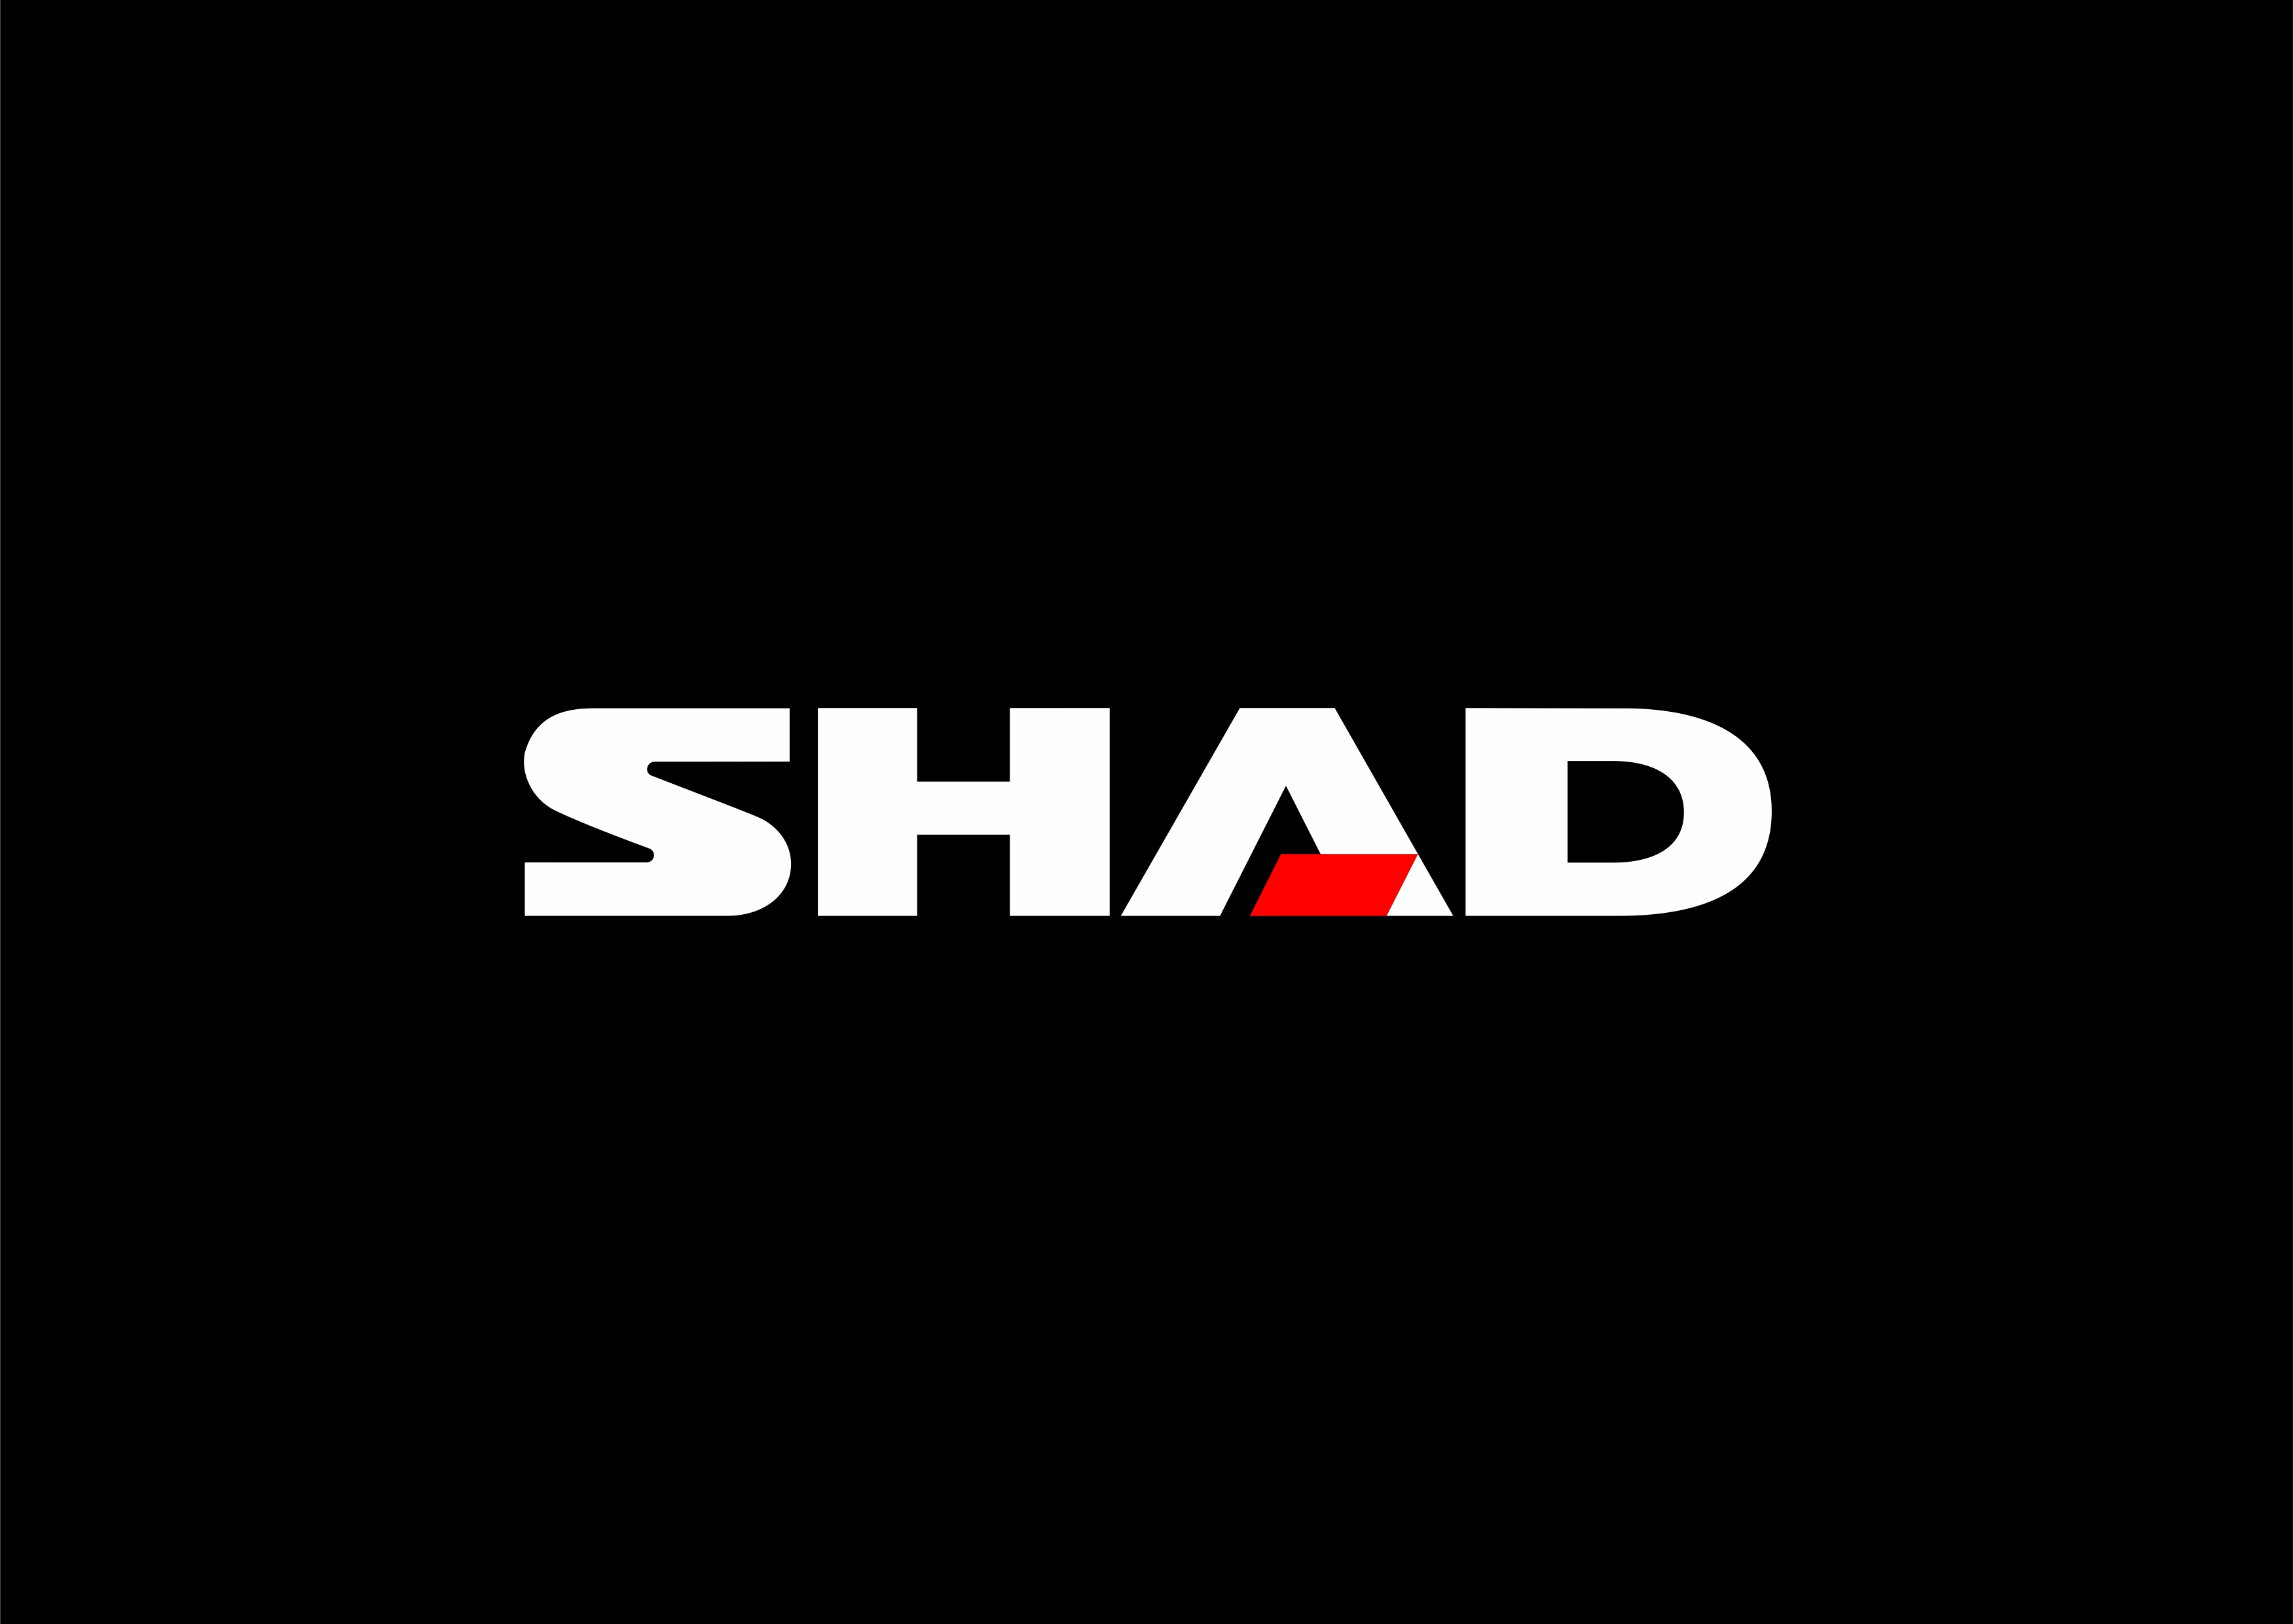    关于 “SHAD”商标侵权的严正申明